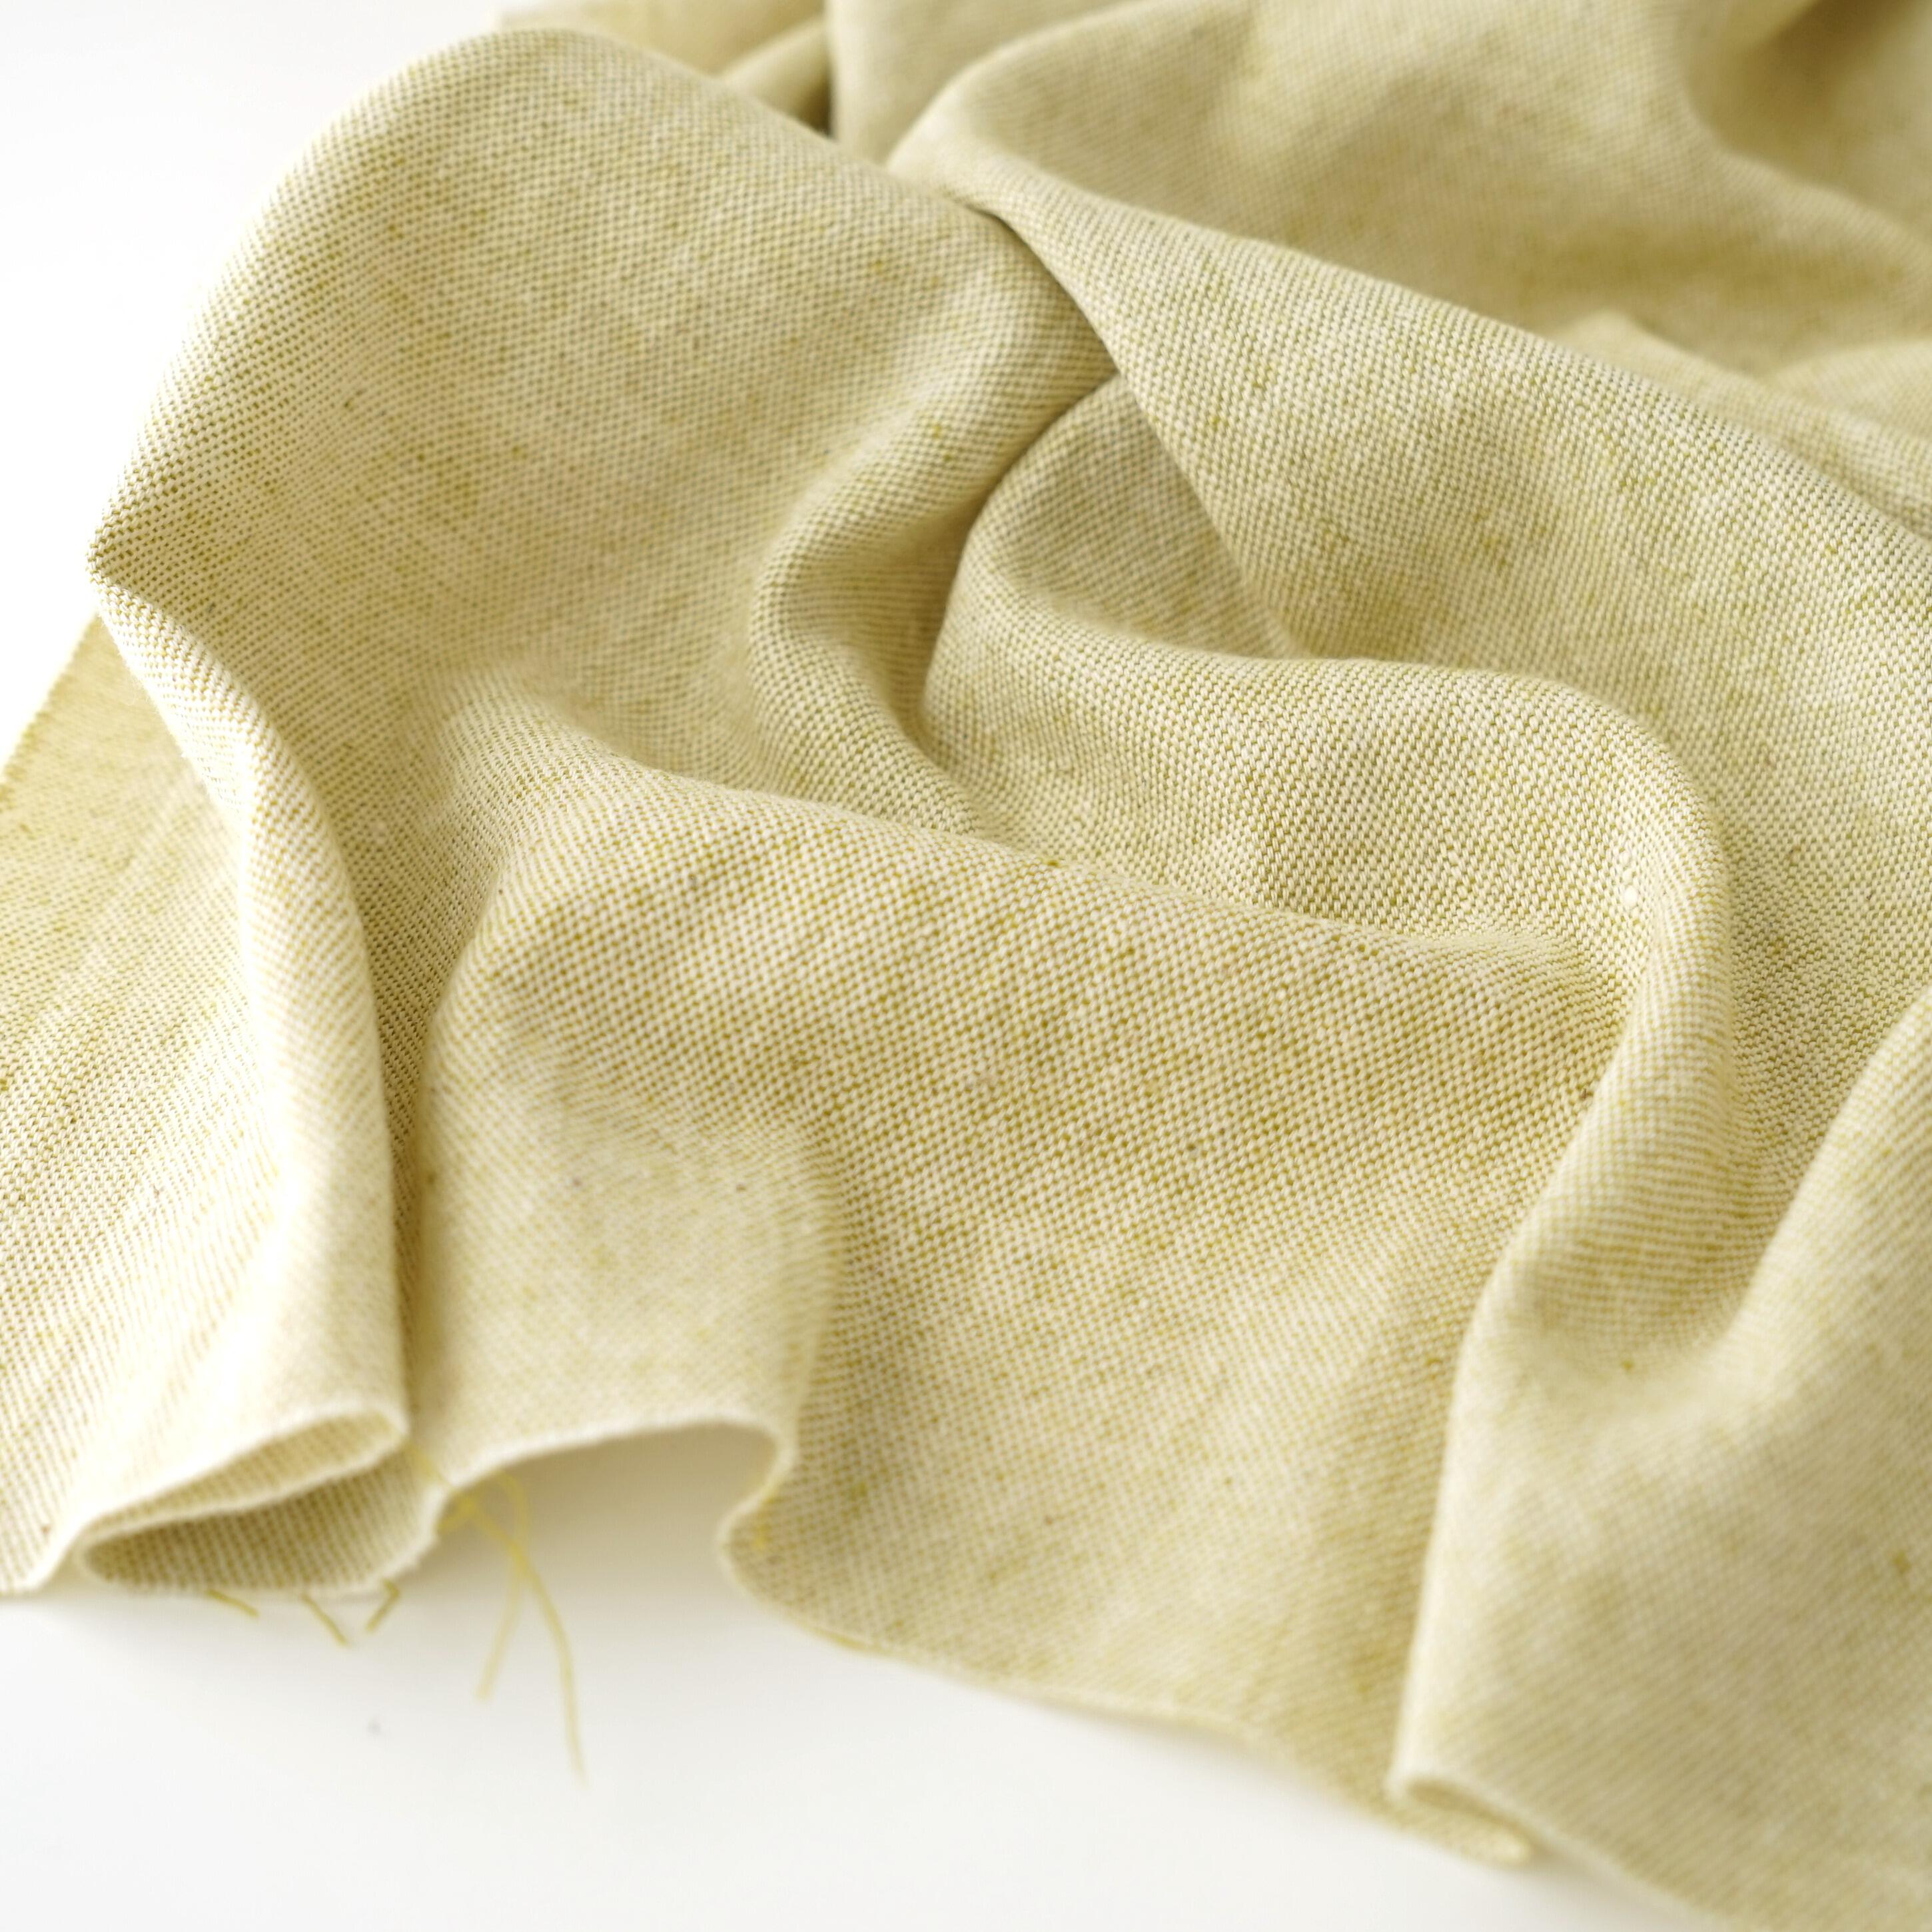 Organic Kala Cotton - Handloom Woven - Irregular Basket Weave - 2 by 1 - White & Yellow - Yarn Dye - Shot Cotton - Contrast